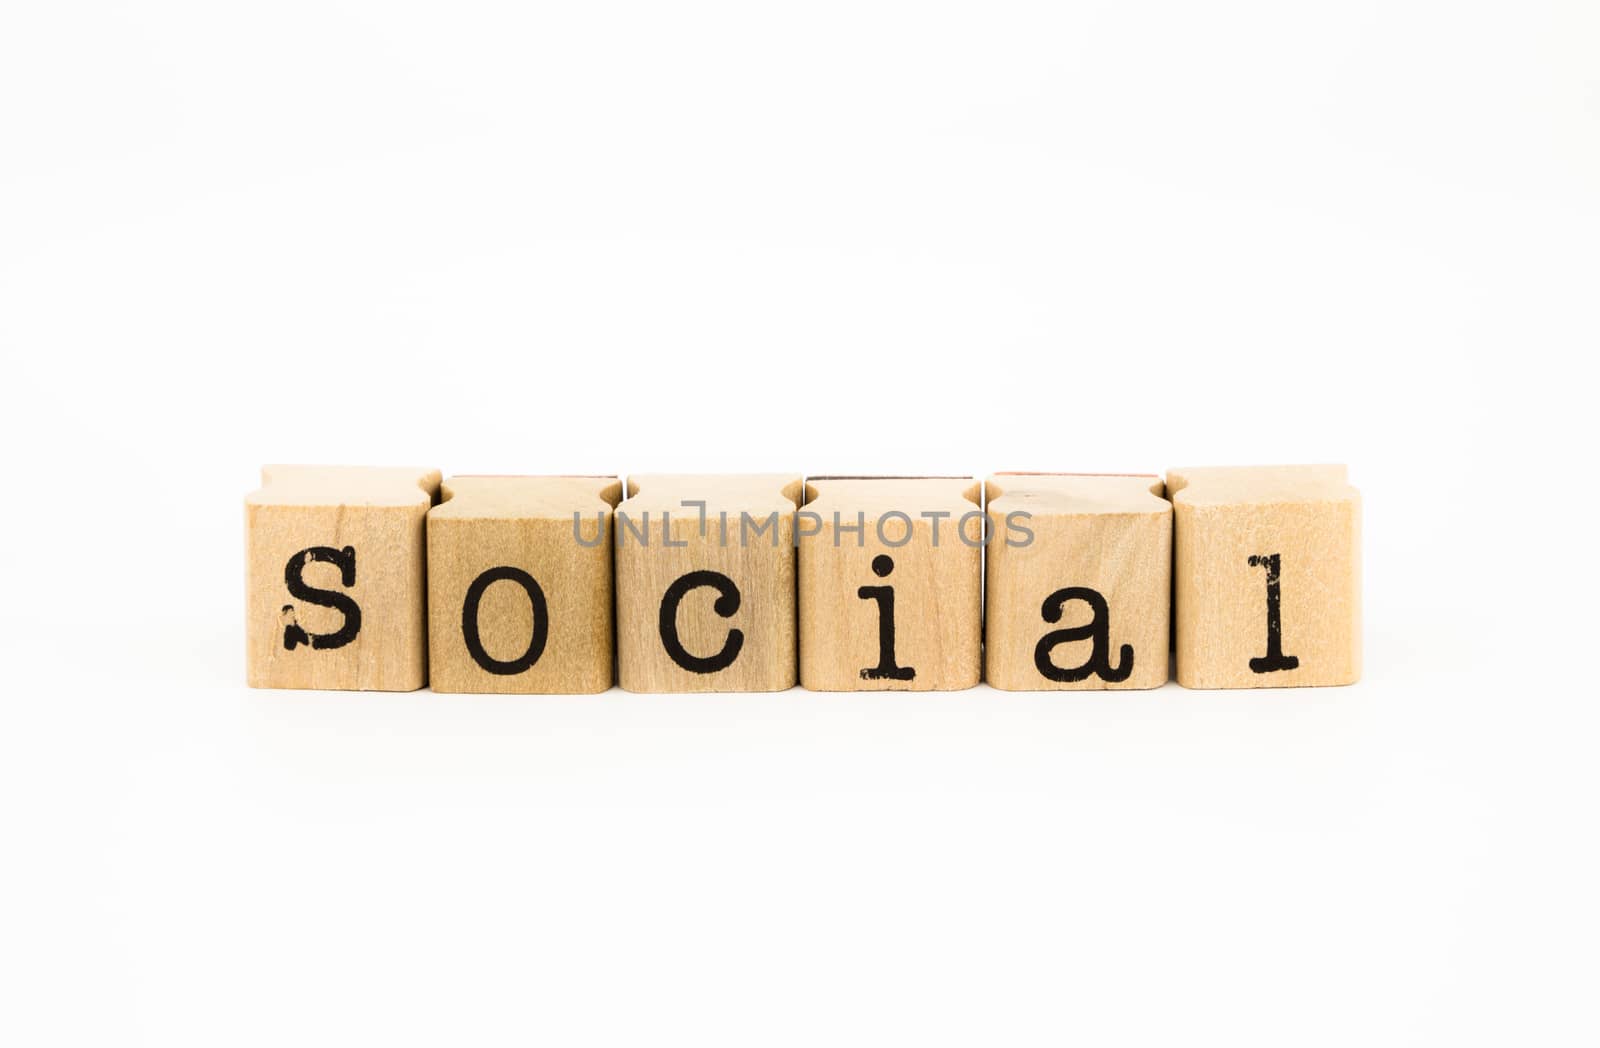 social wording, community and organization concept by vinnstock